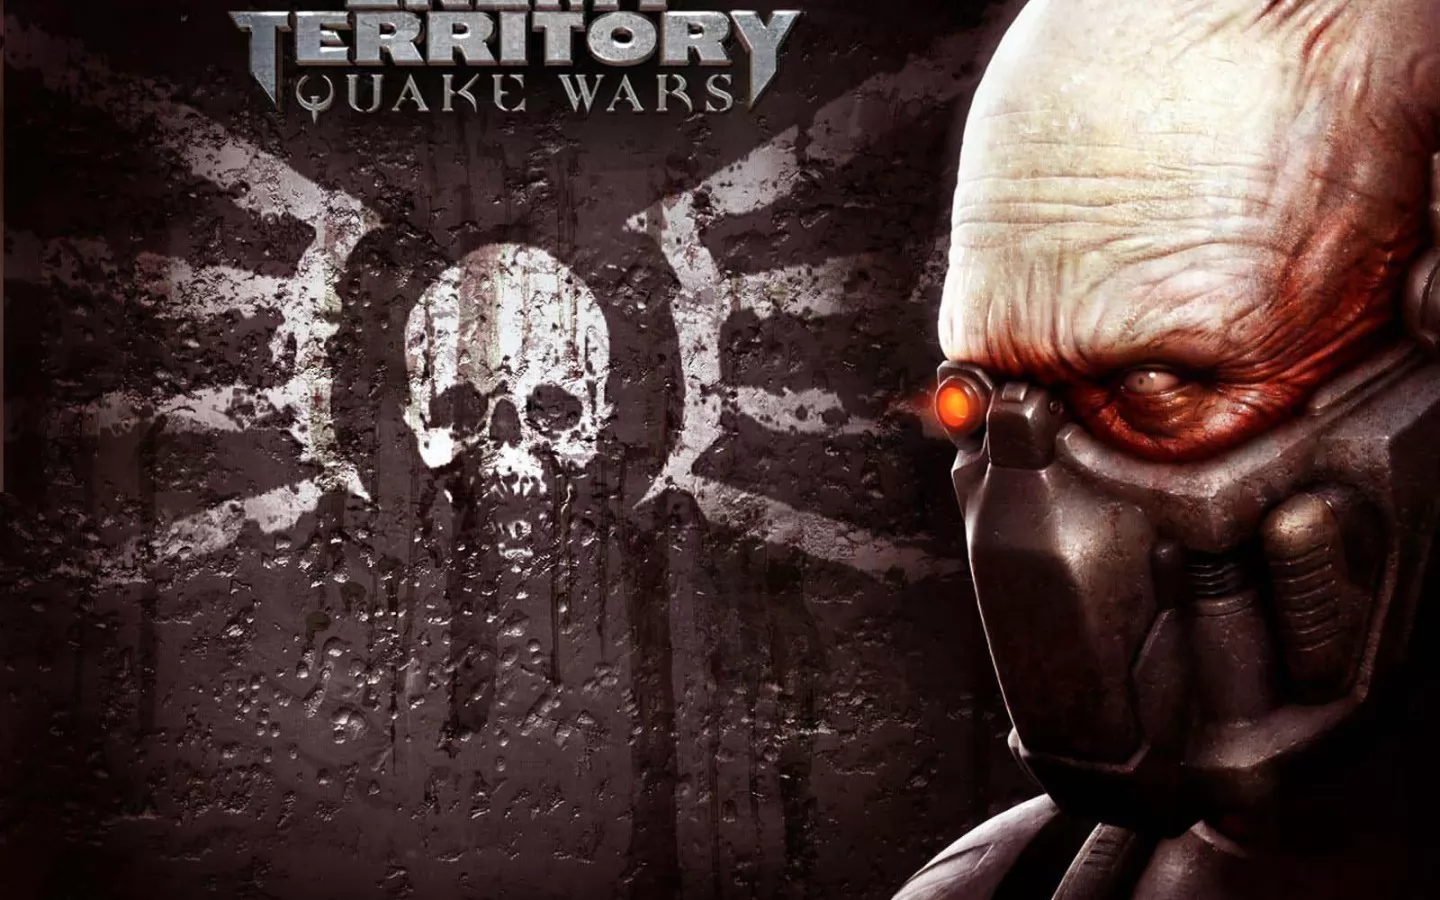 Enemy Territory: Quake Wars,   